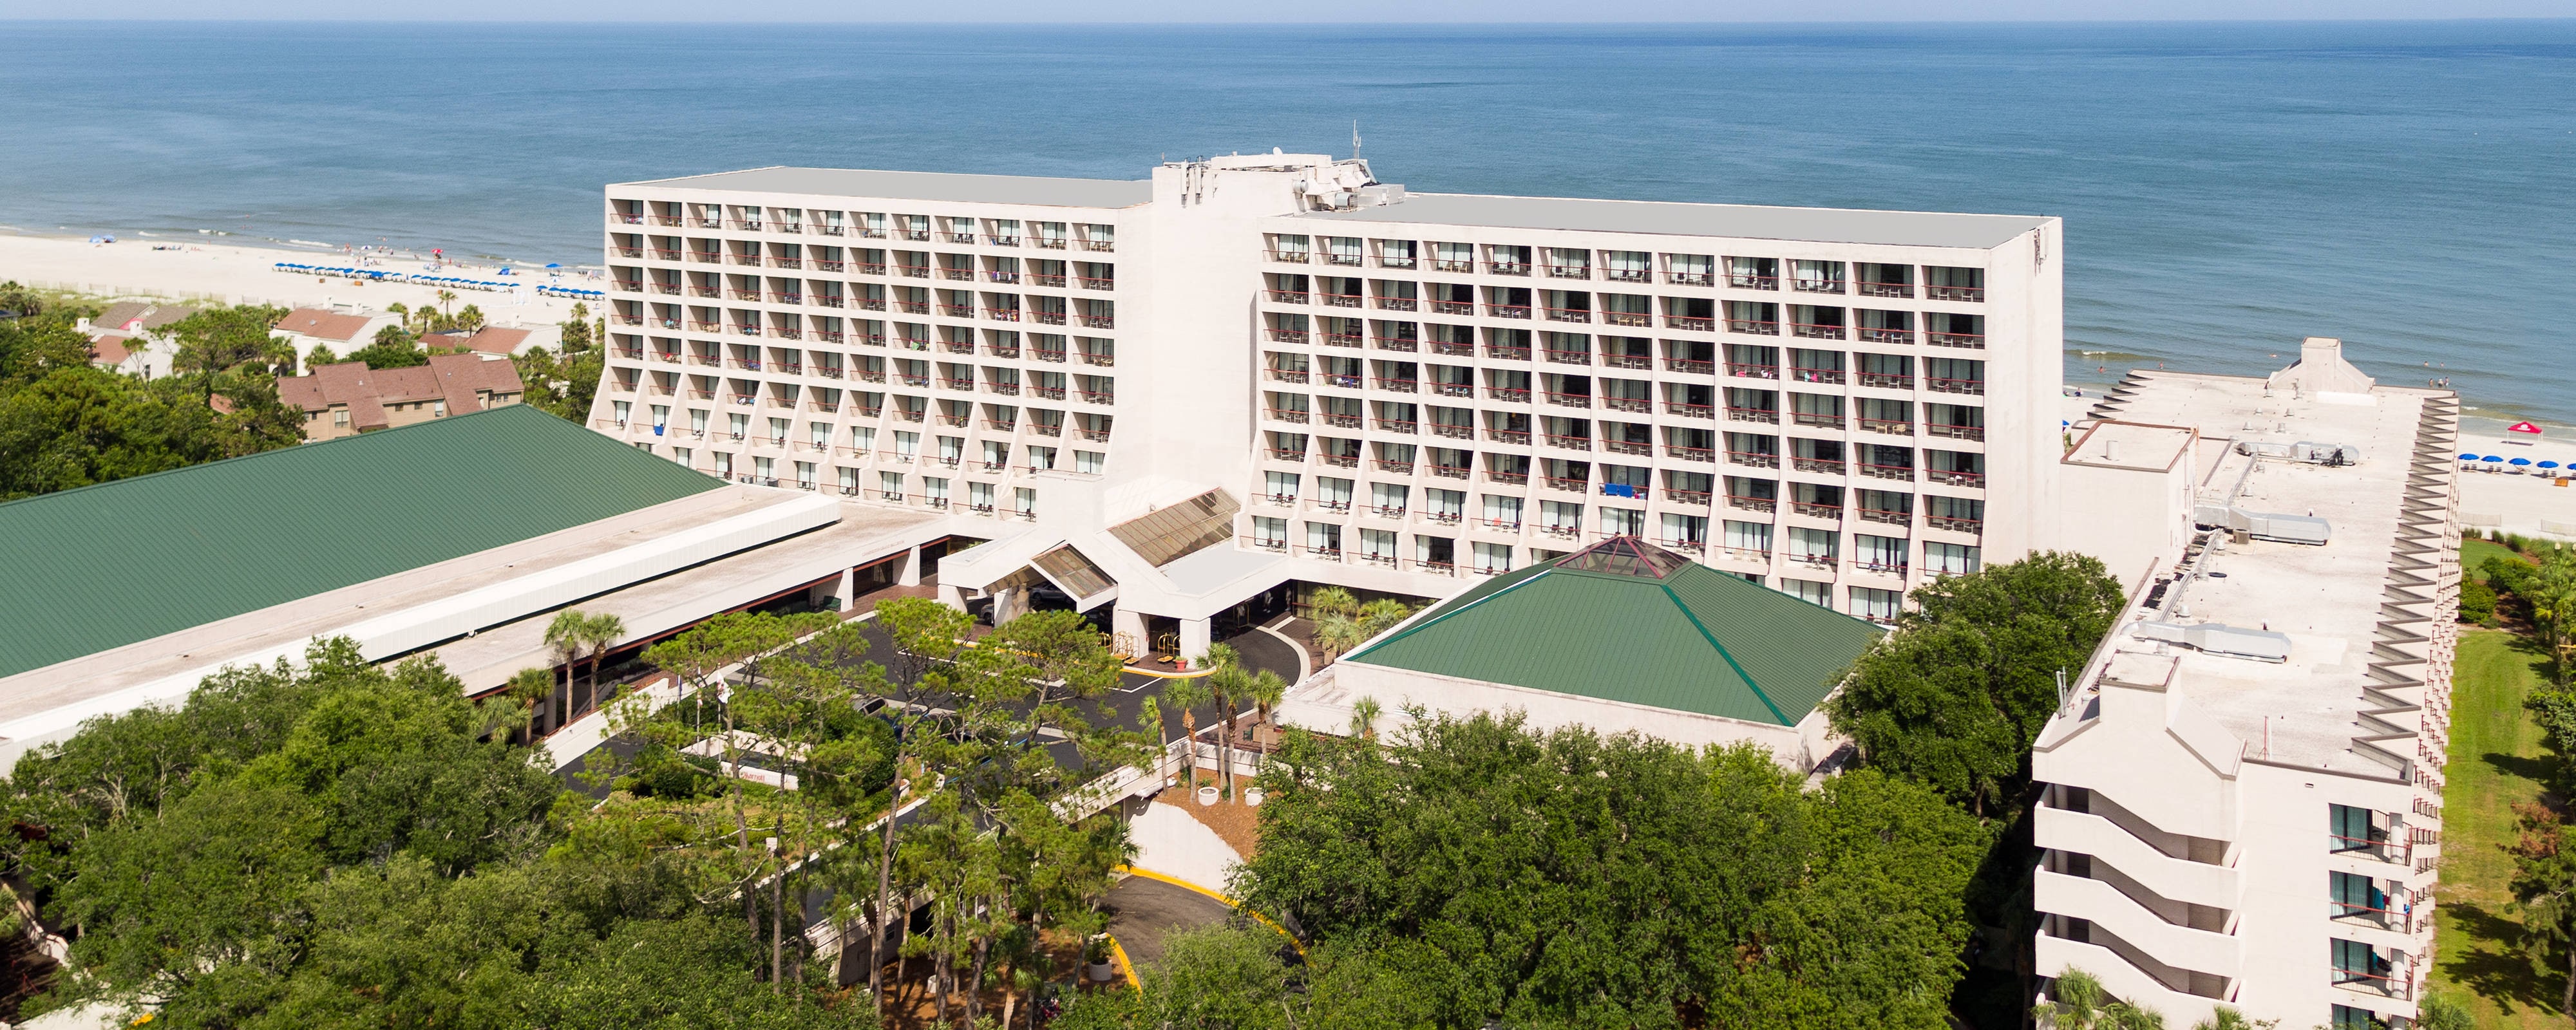 Hilton Head Hotel Hilton Head Marriott Resort And Spa